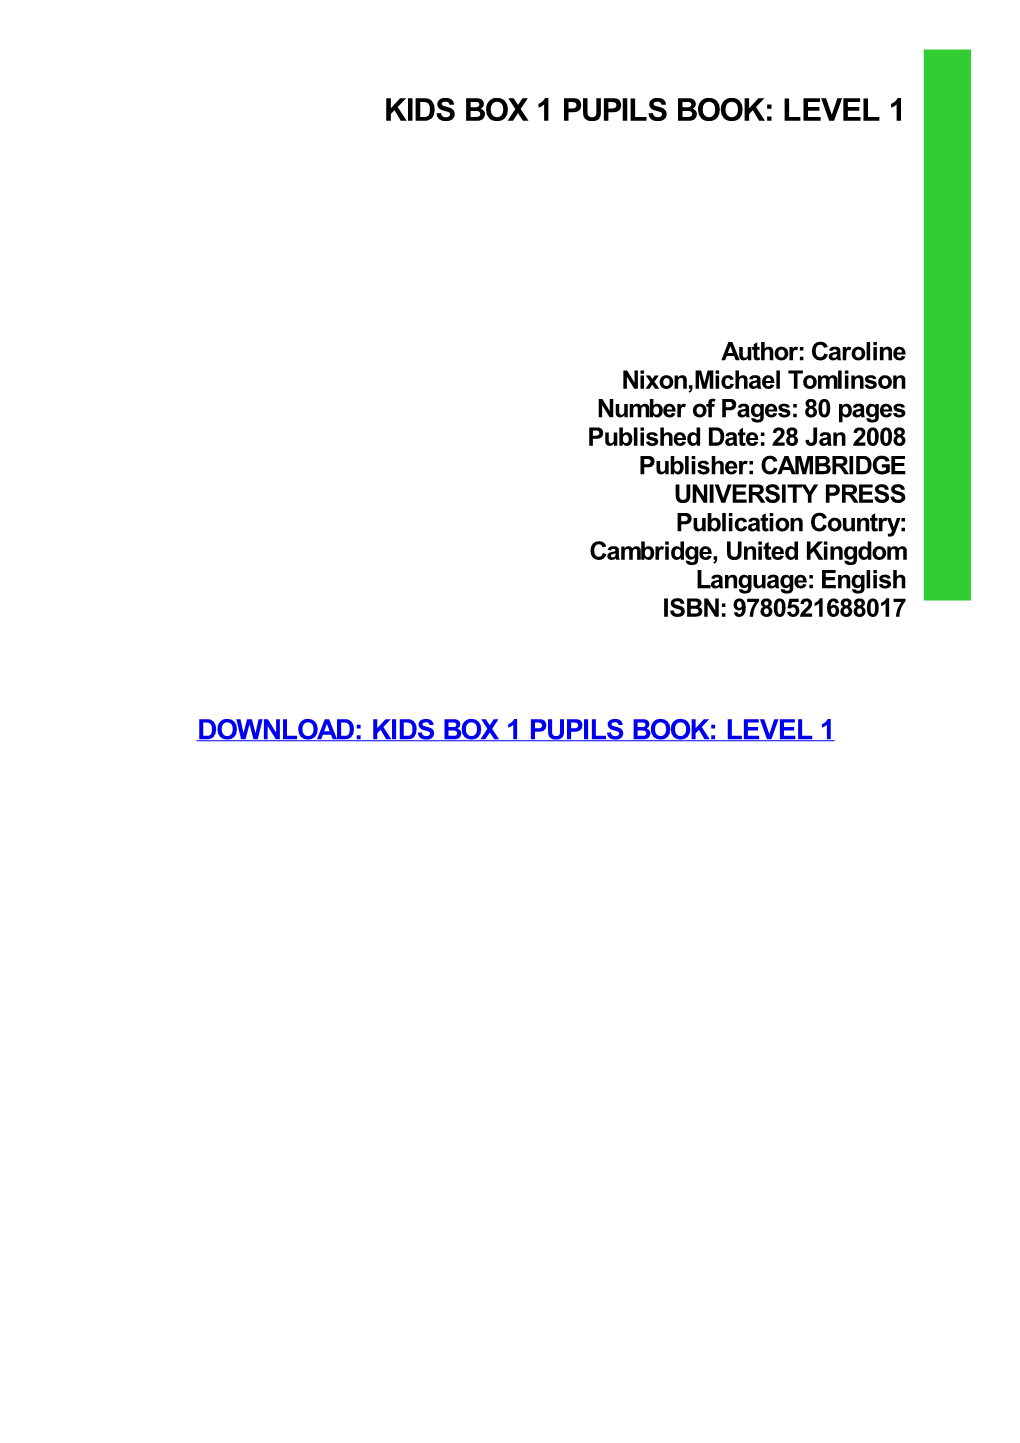 Kids Box 1 Pupils Book: Level 1 Pdf Free Download